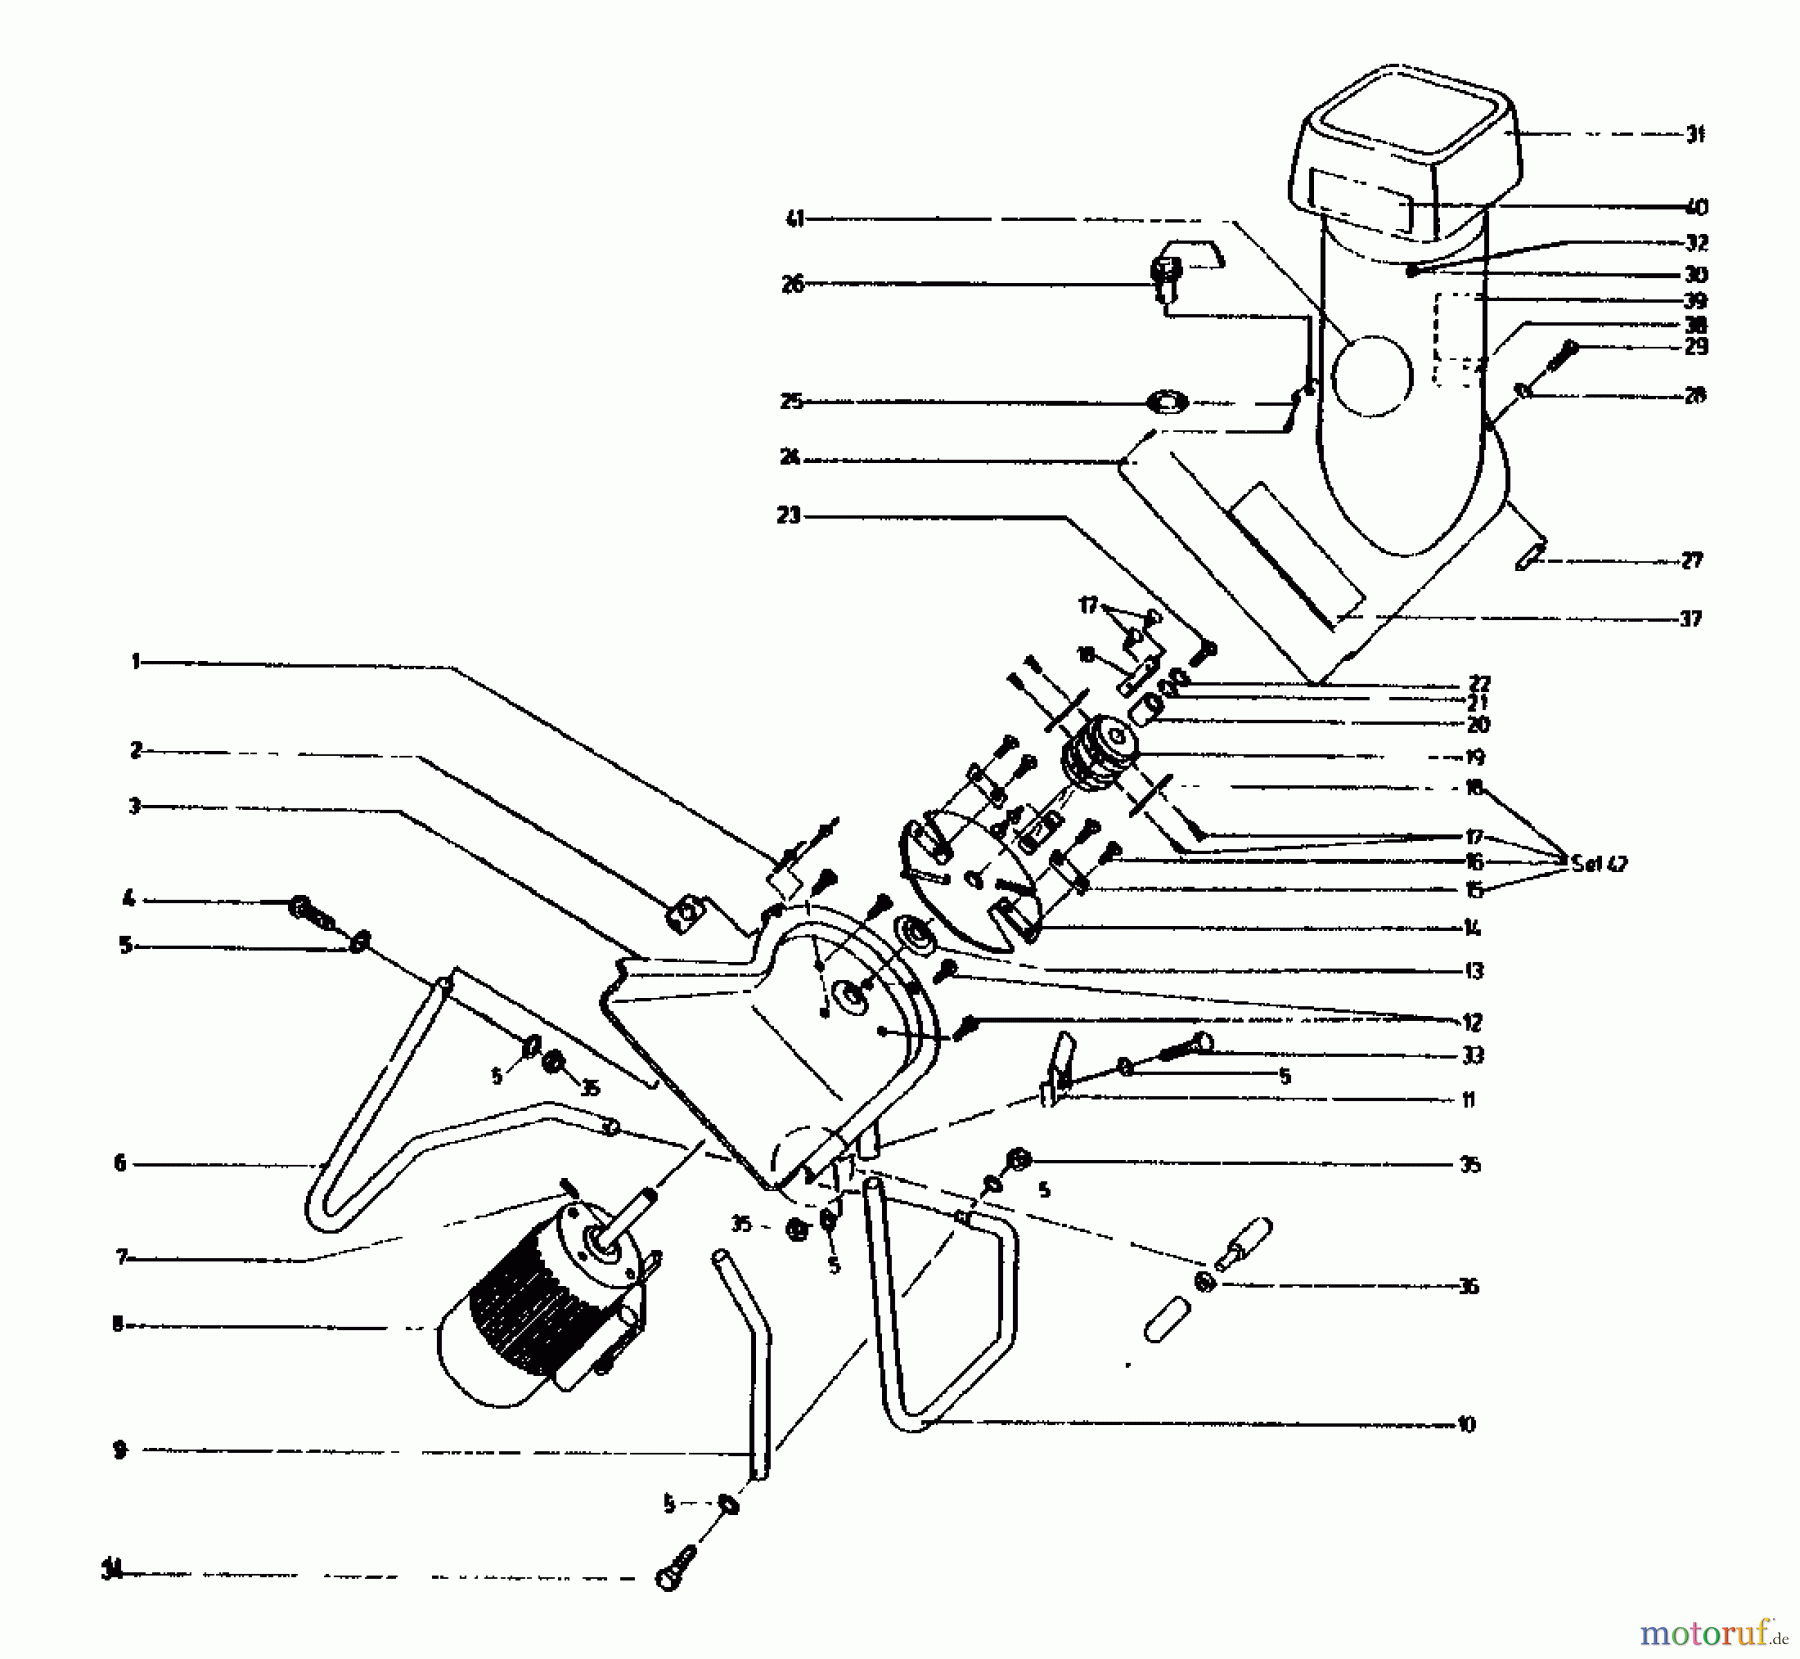  Gutbrod Broyeur GAE 13 04002.03  (1991) Machine de base